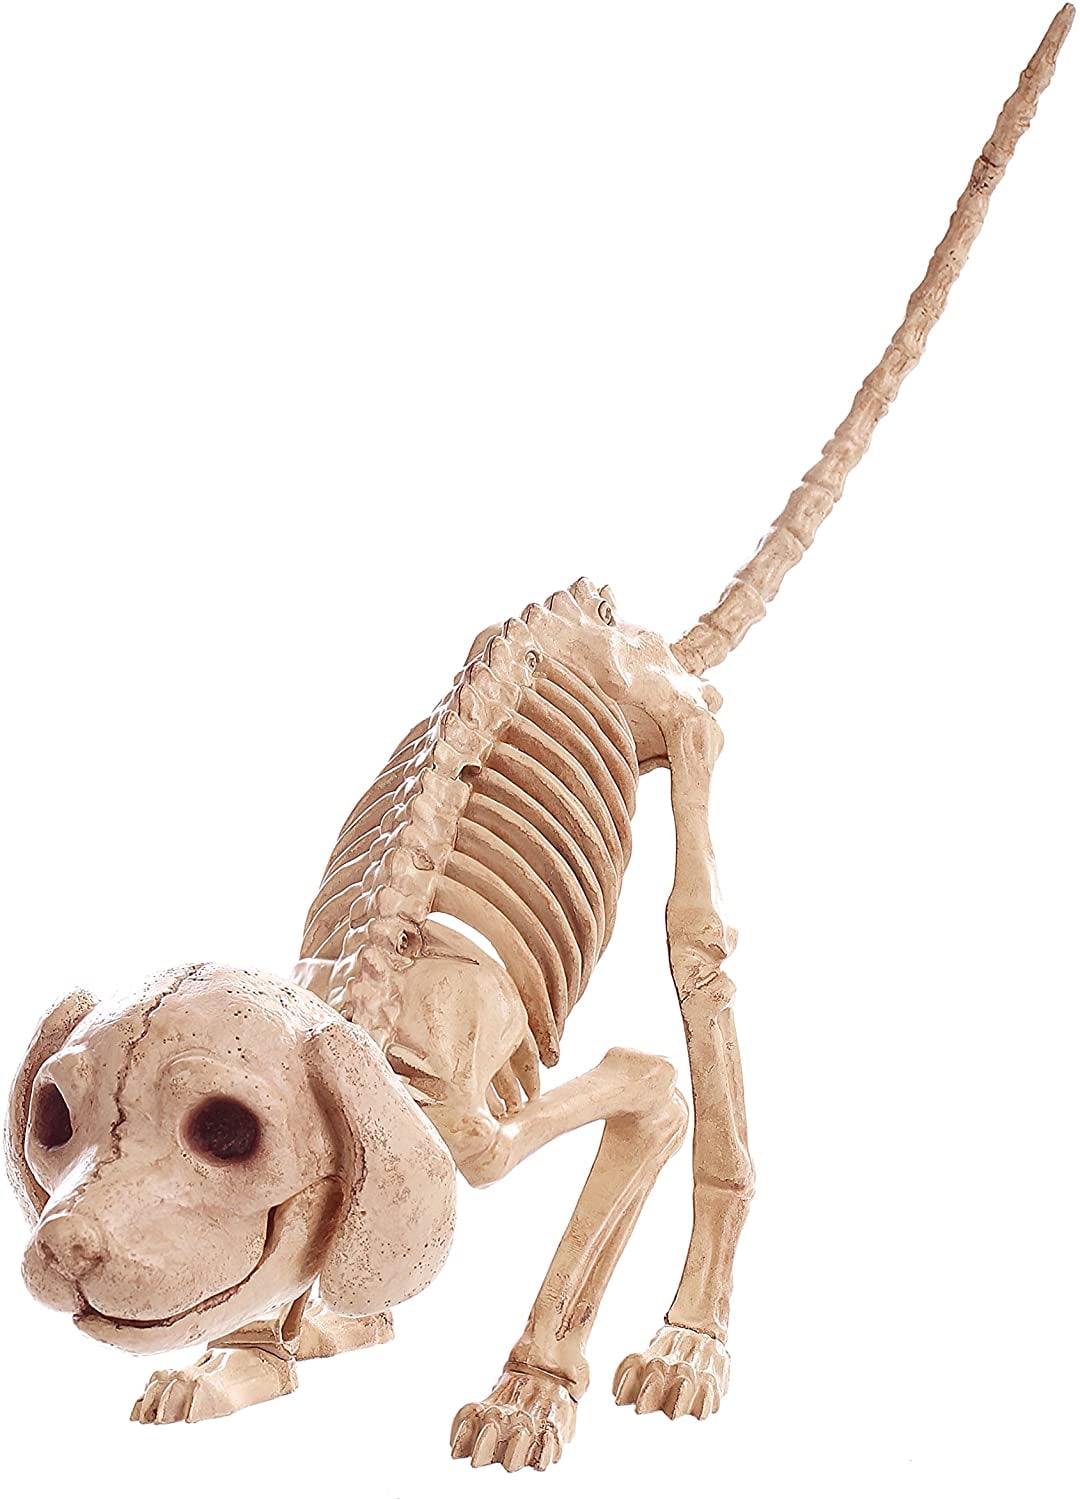 are dog tails bone